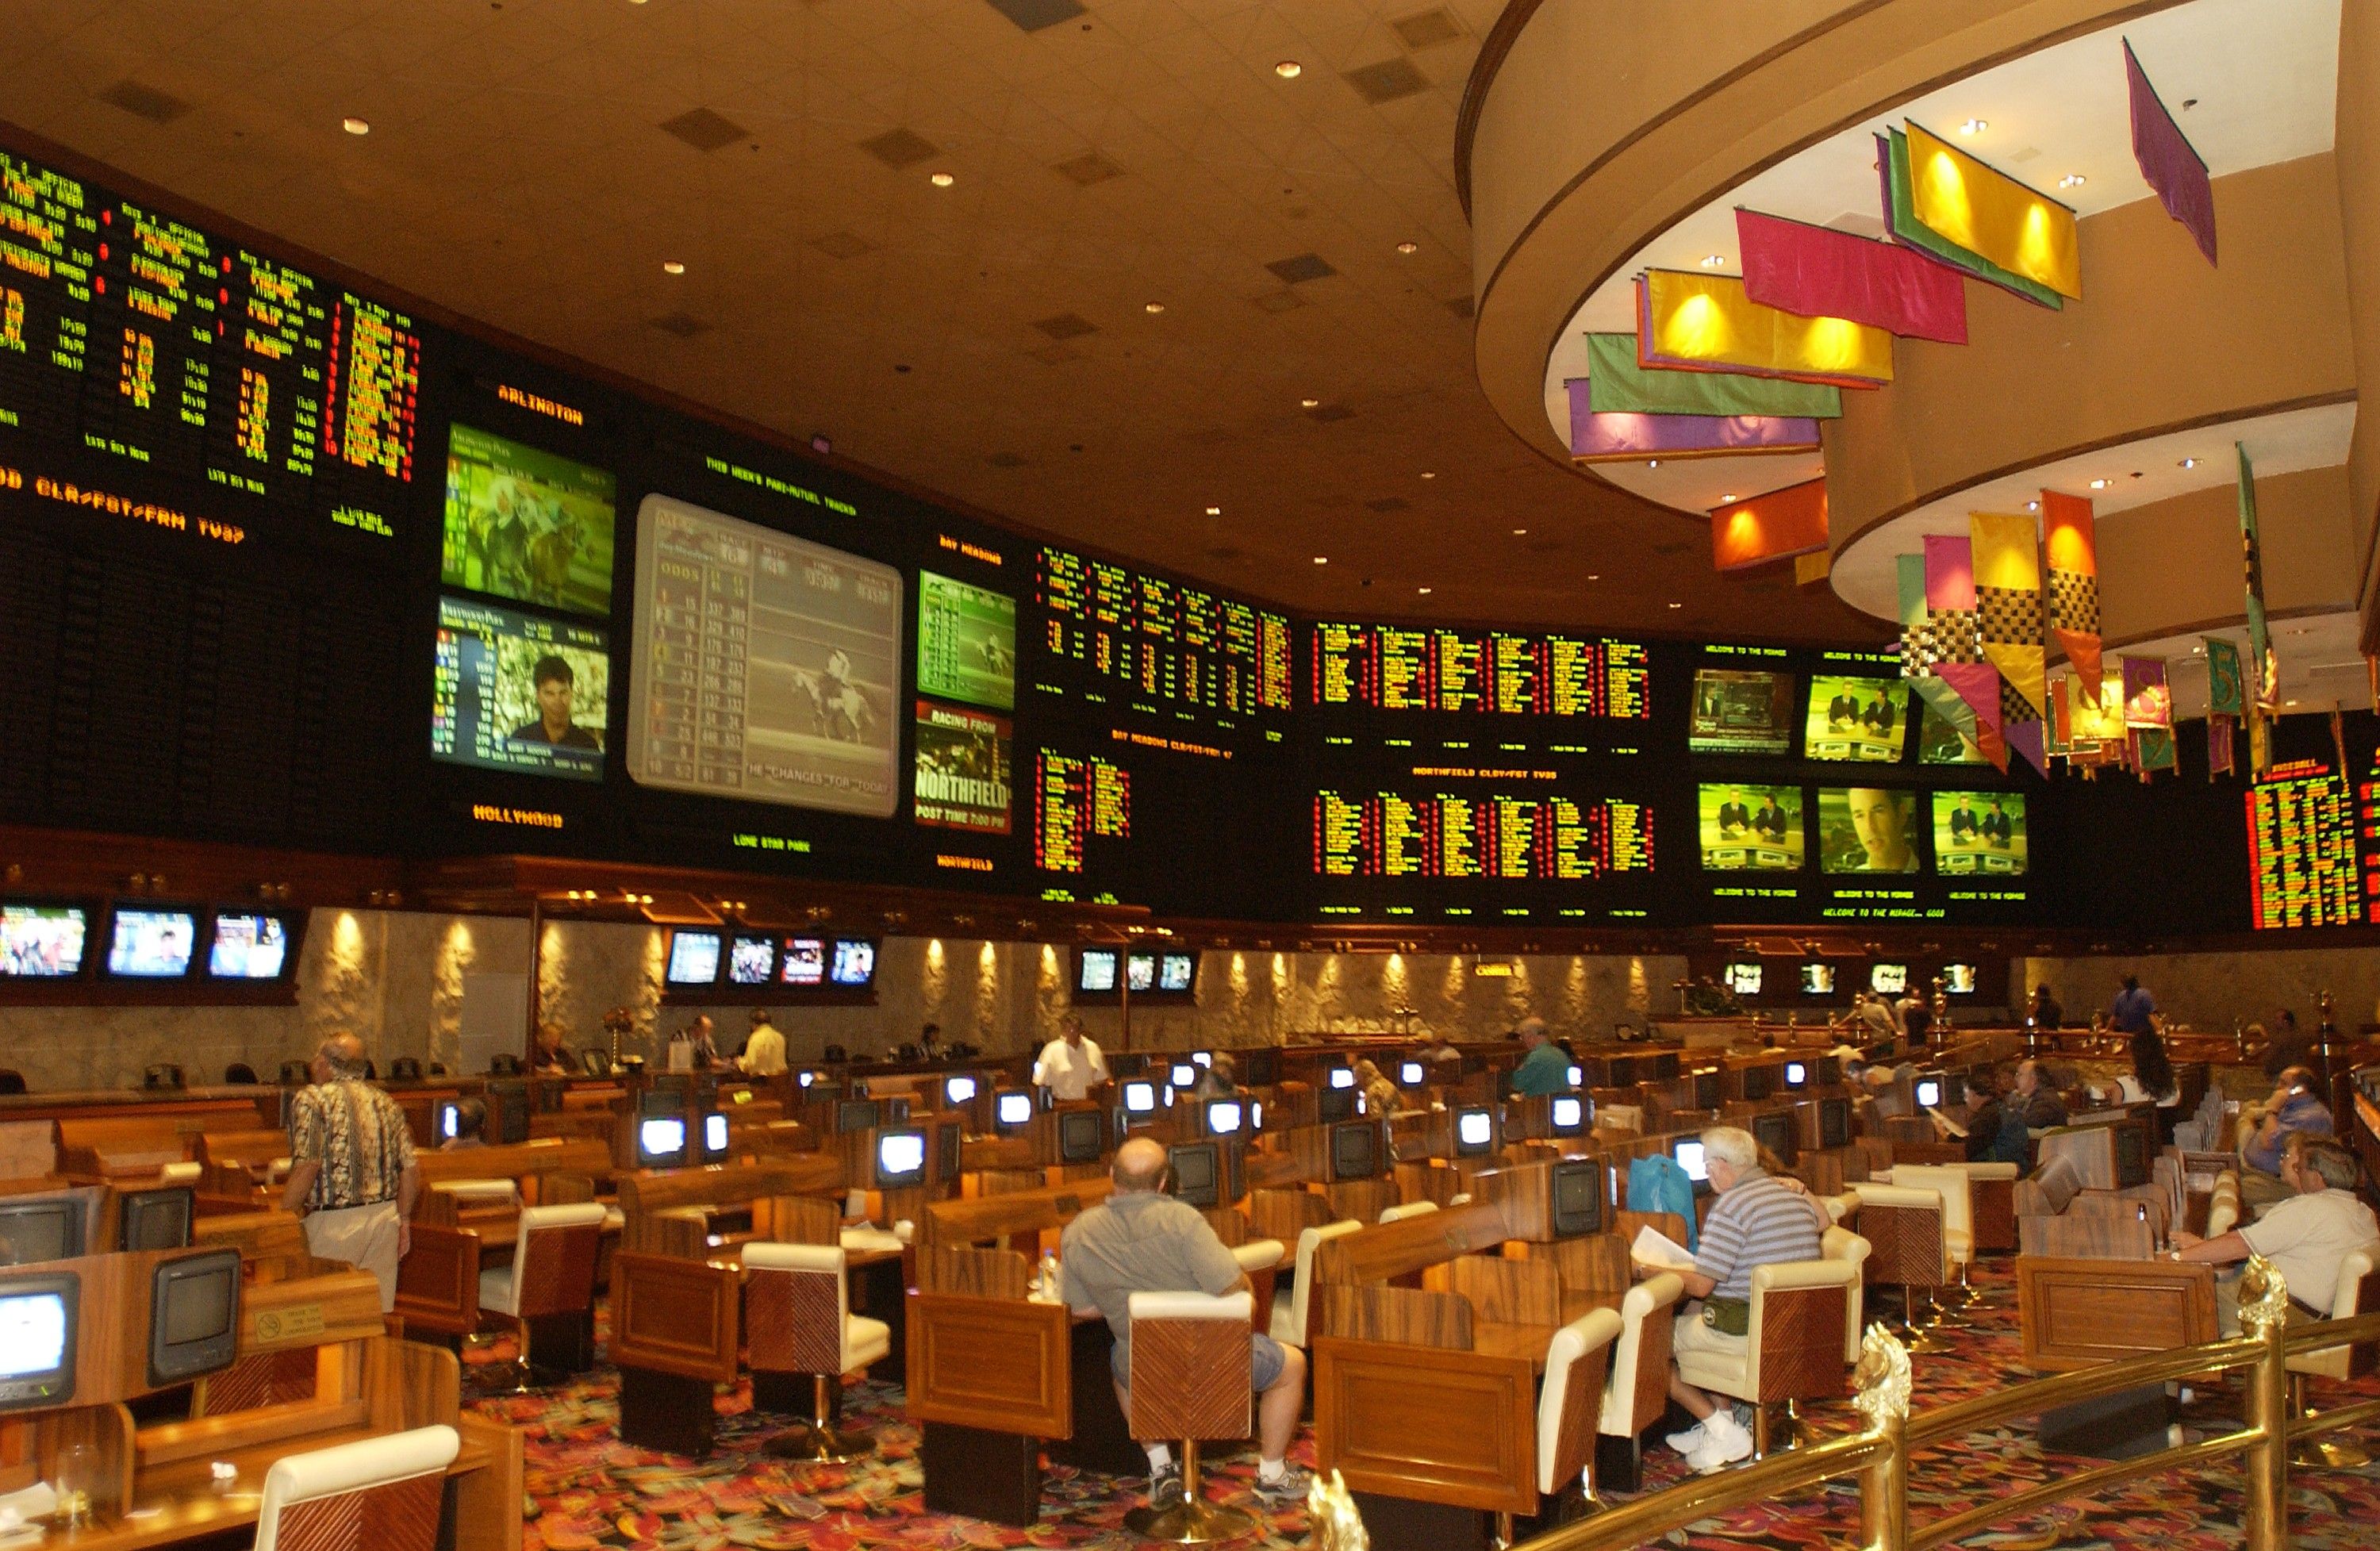 The Best Slot Machines at MGM Vegas – BetMGM